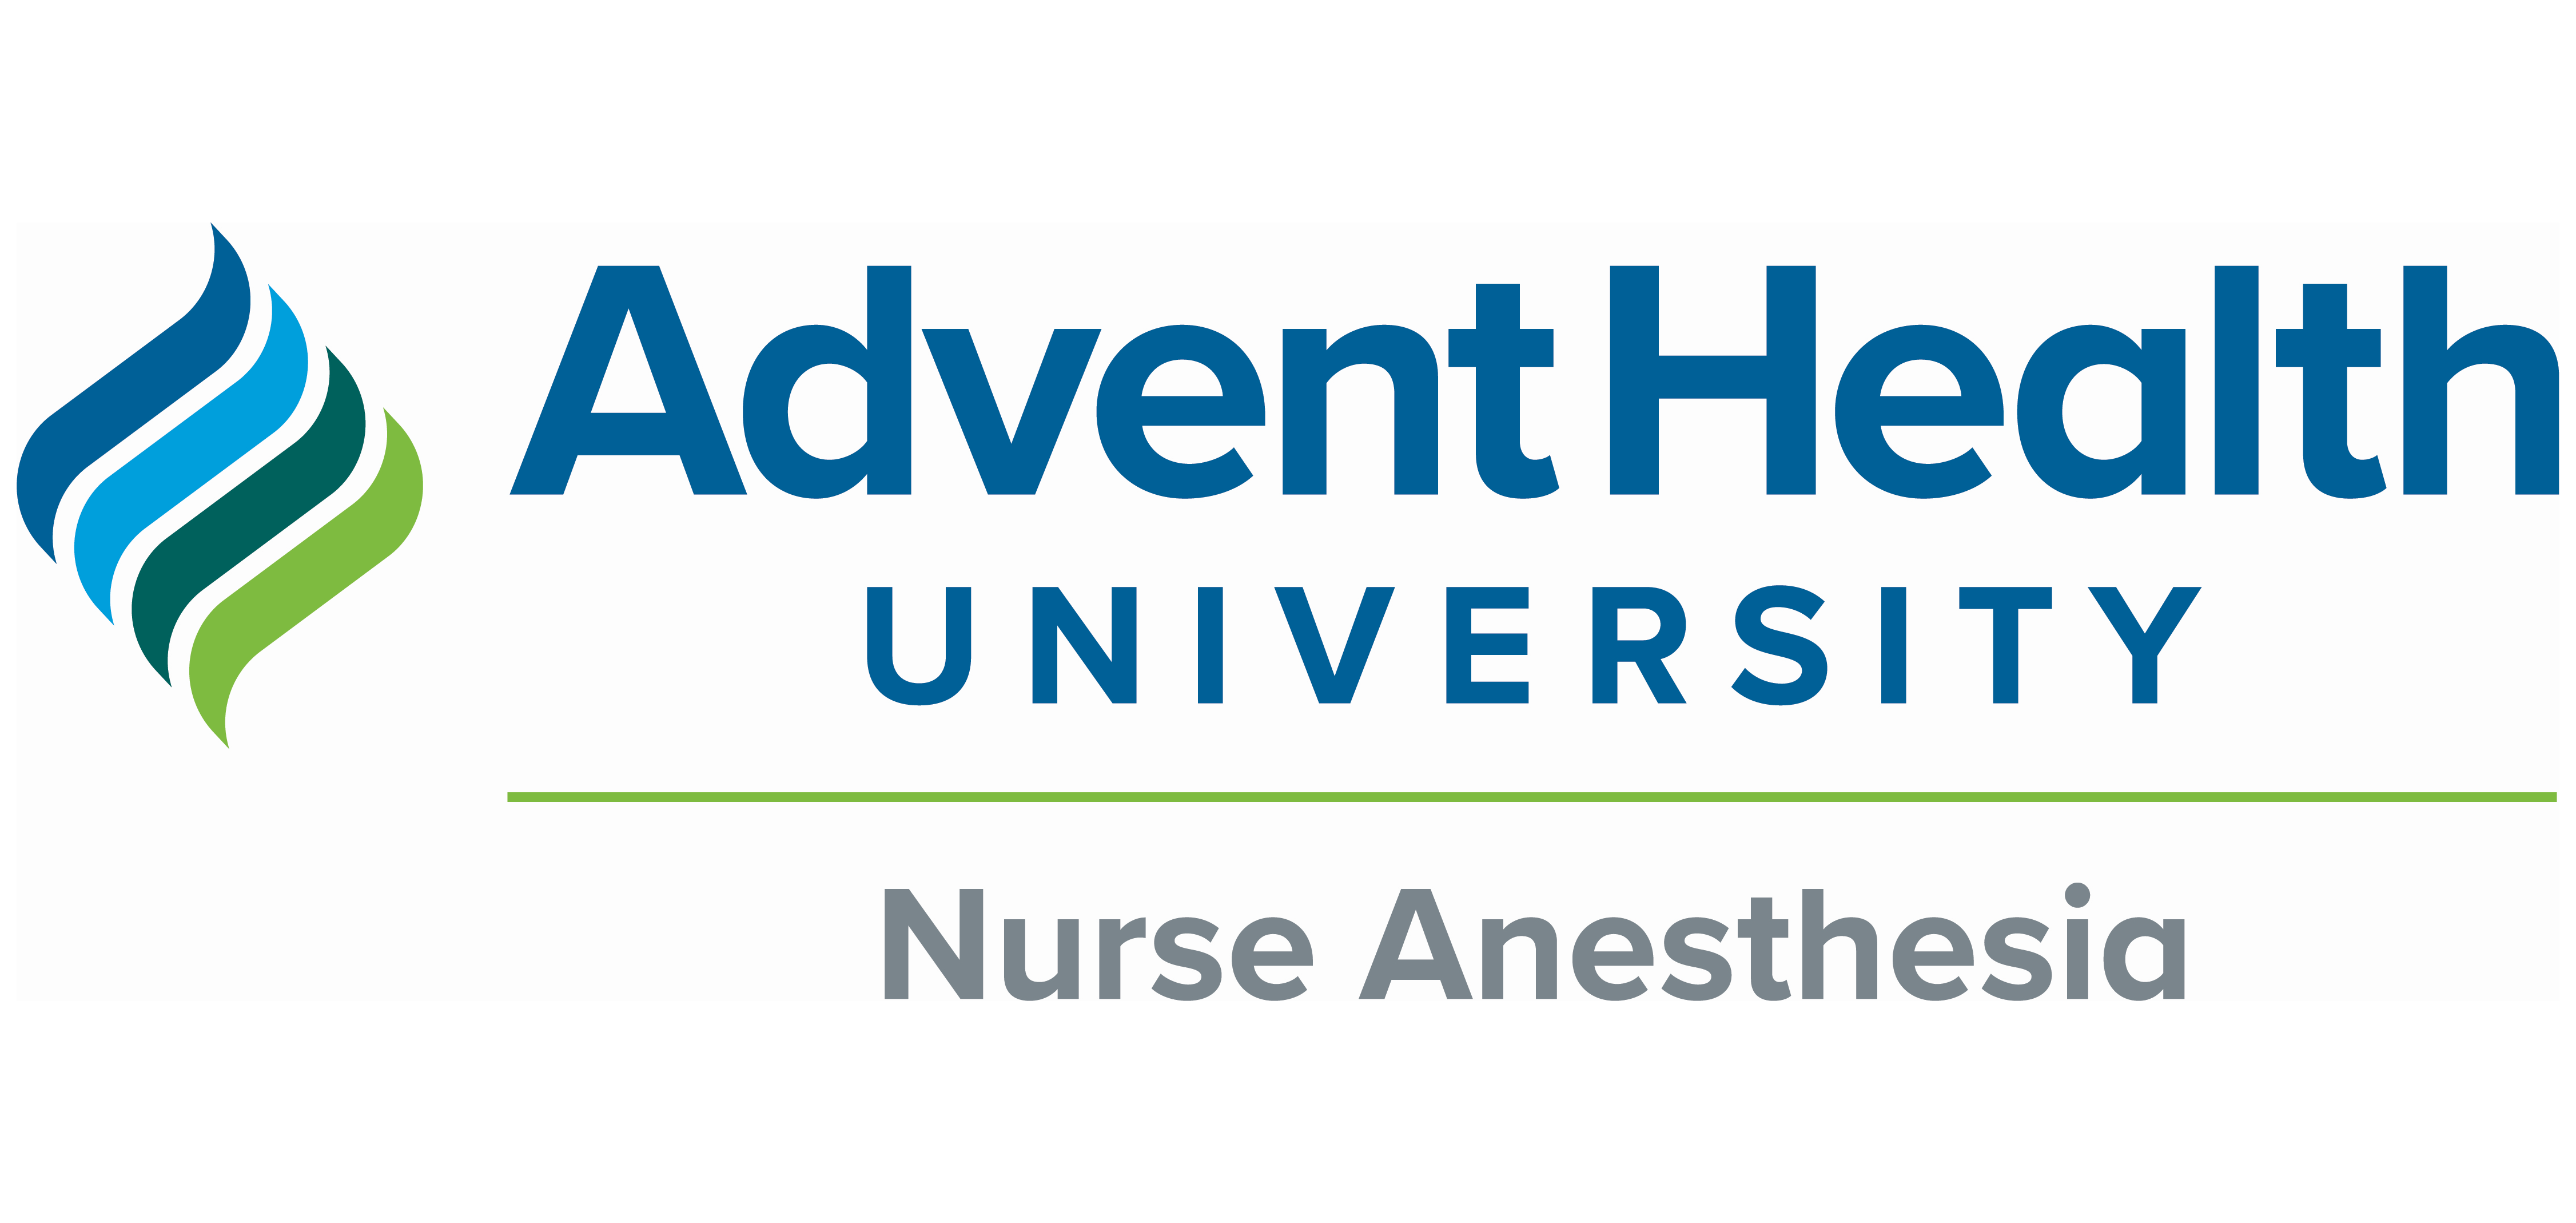 Showcase Image for AdventHealth University - Nurse Anesthesia Program